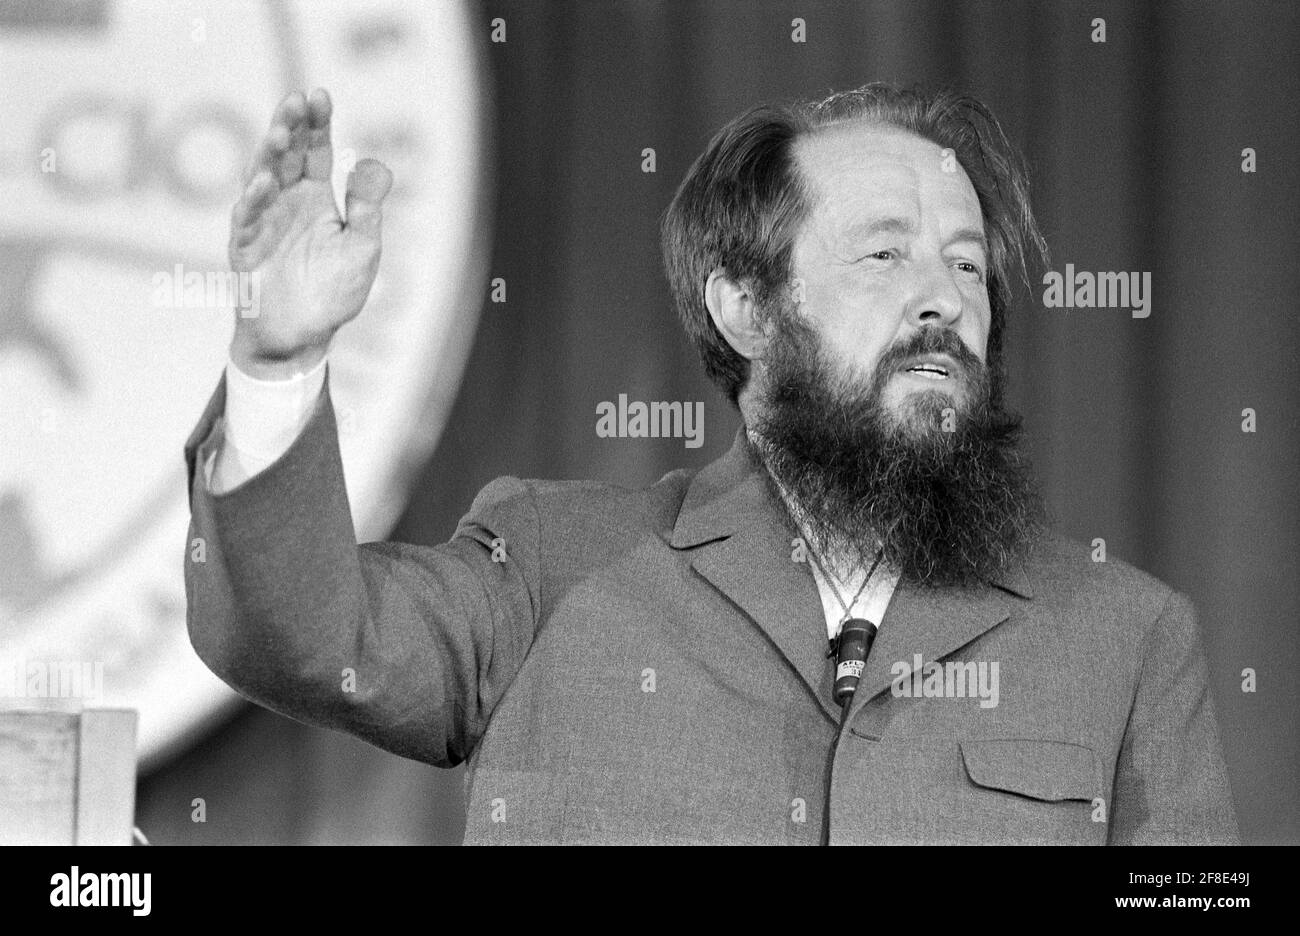 Aleksandr Solzhenitsyn (1918-2008), Russian Novelist and Writer, speaking at a meeting of the AFL-CIO, Marion S. Trikosko, June 1975 Stock Photo